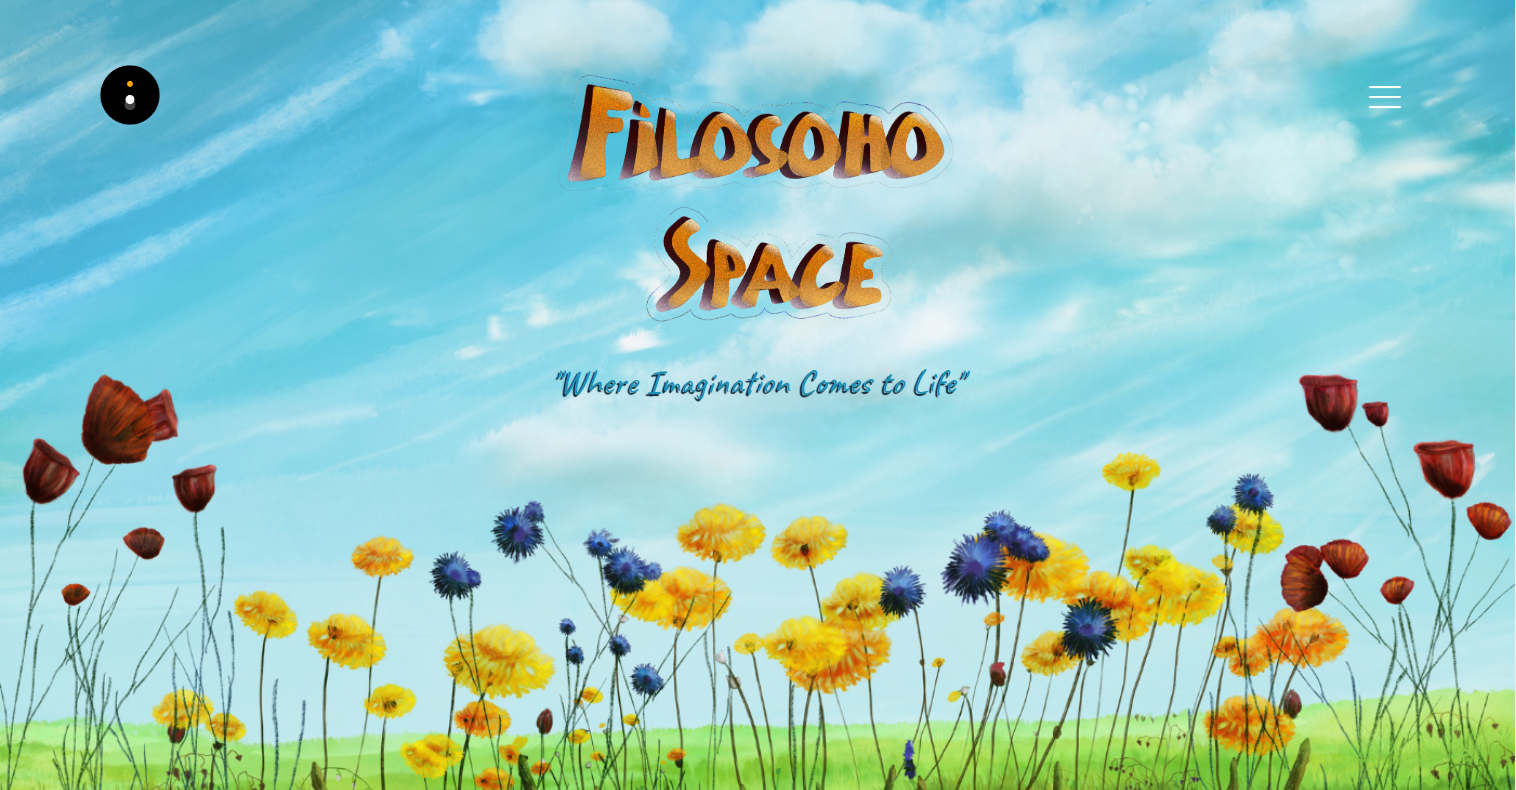 filosoho space website